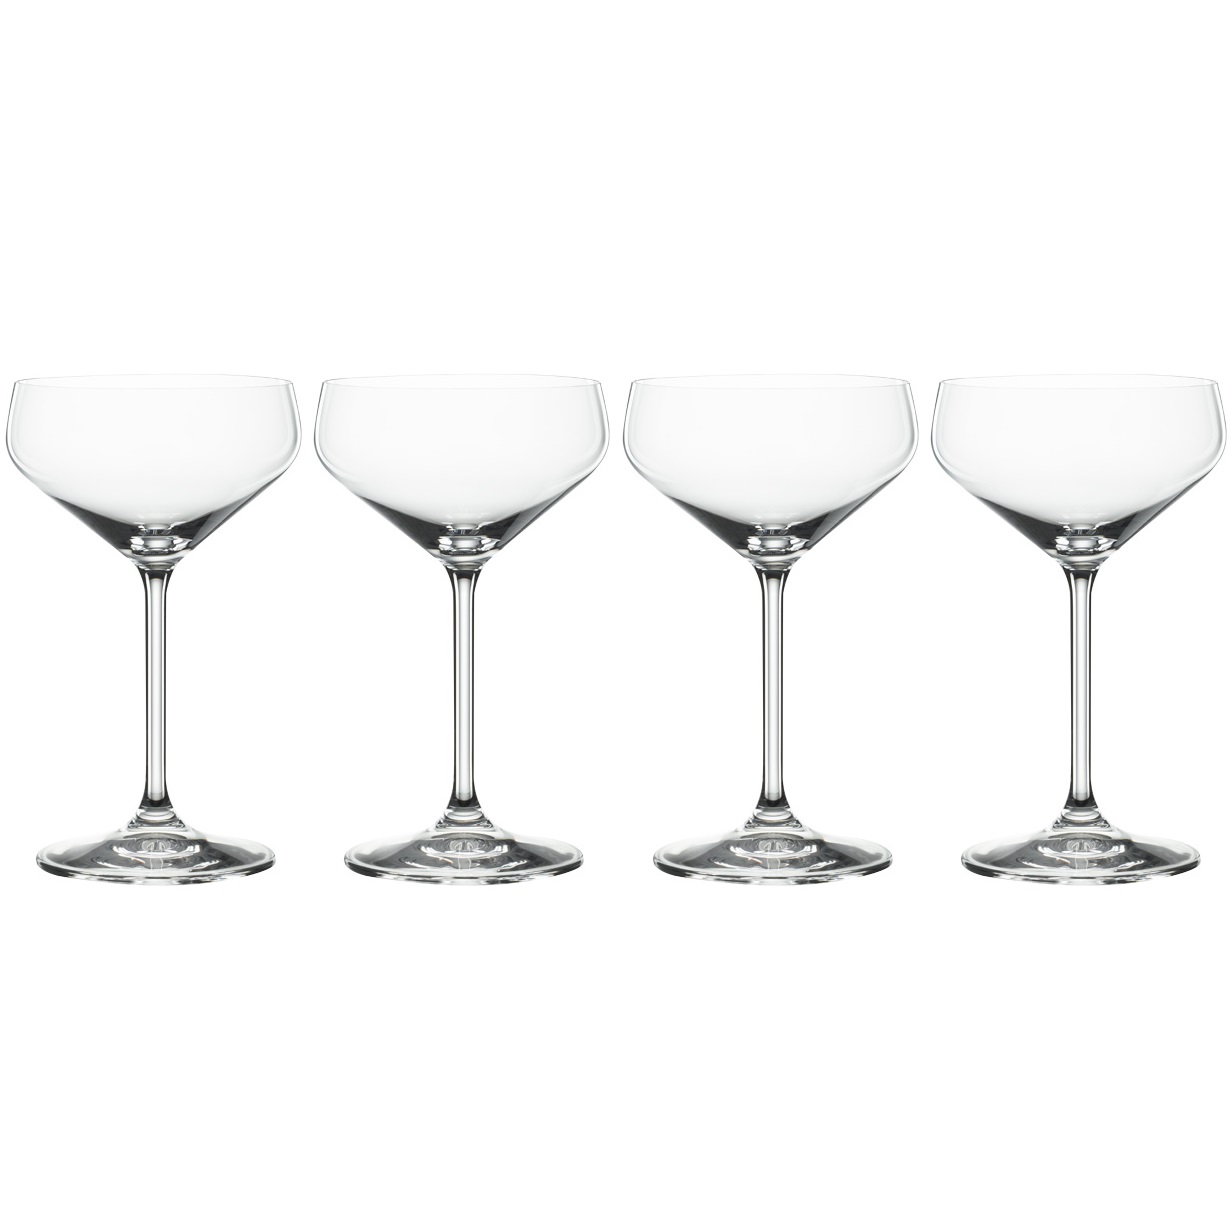 4 бокала для коктейлей Spiegelau Style Coupette 290 мл (арт. 4670188)